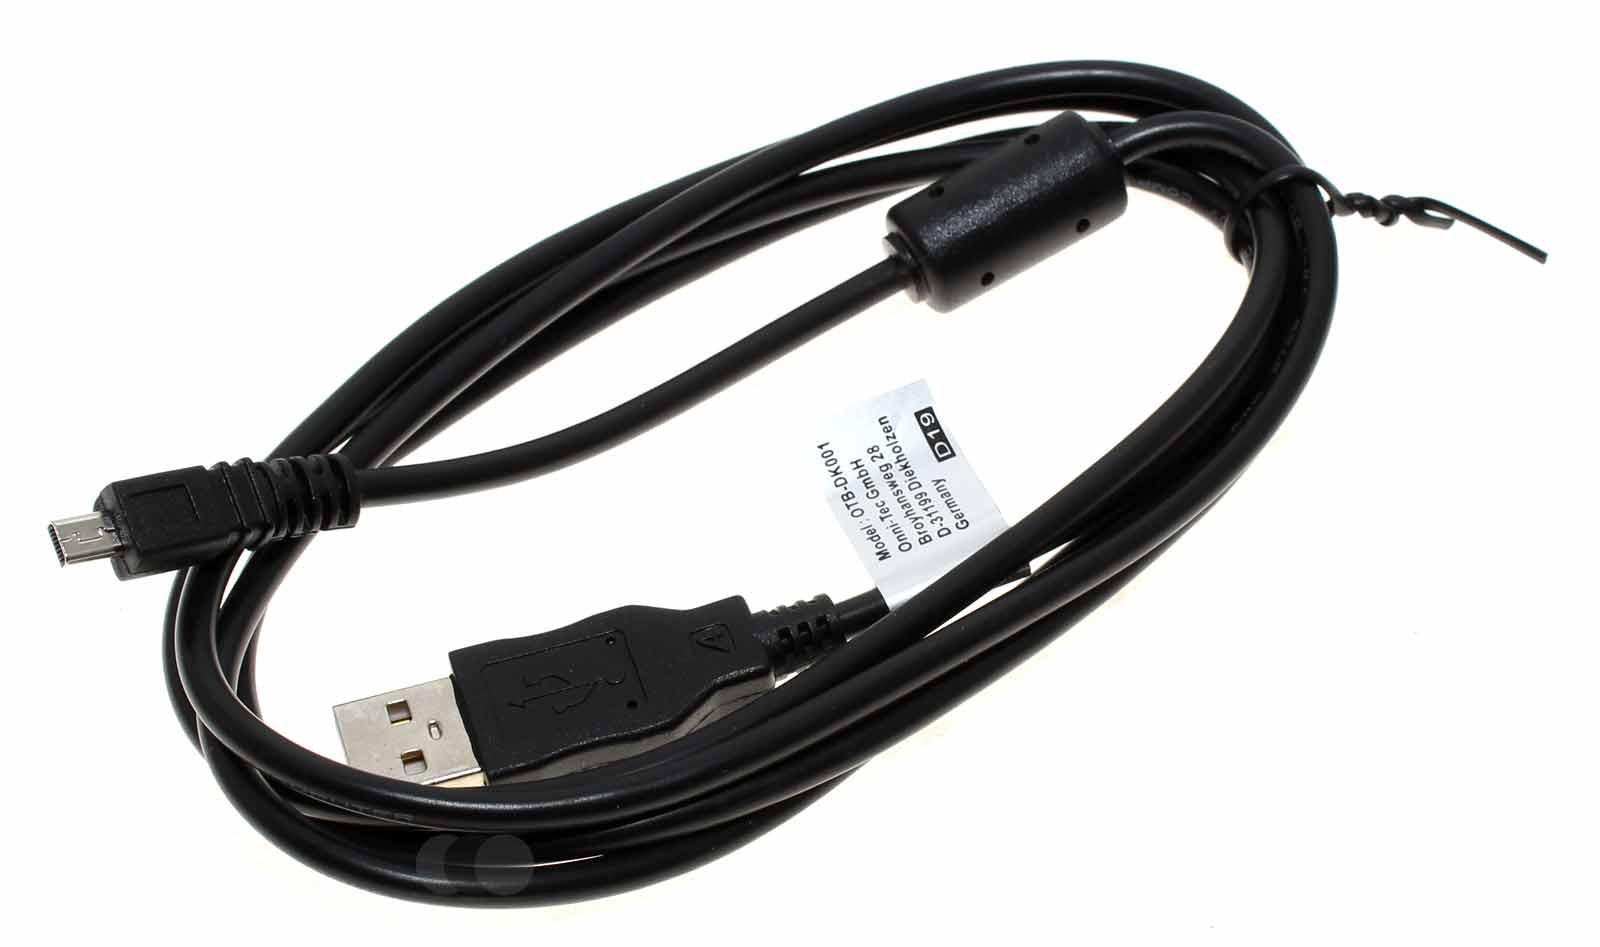 1,5m USB Datenkabel für Digitalkameras, wie Panasonic K1HA08CD0019 Casio EMC-5 Nikon UC-E6